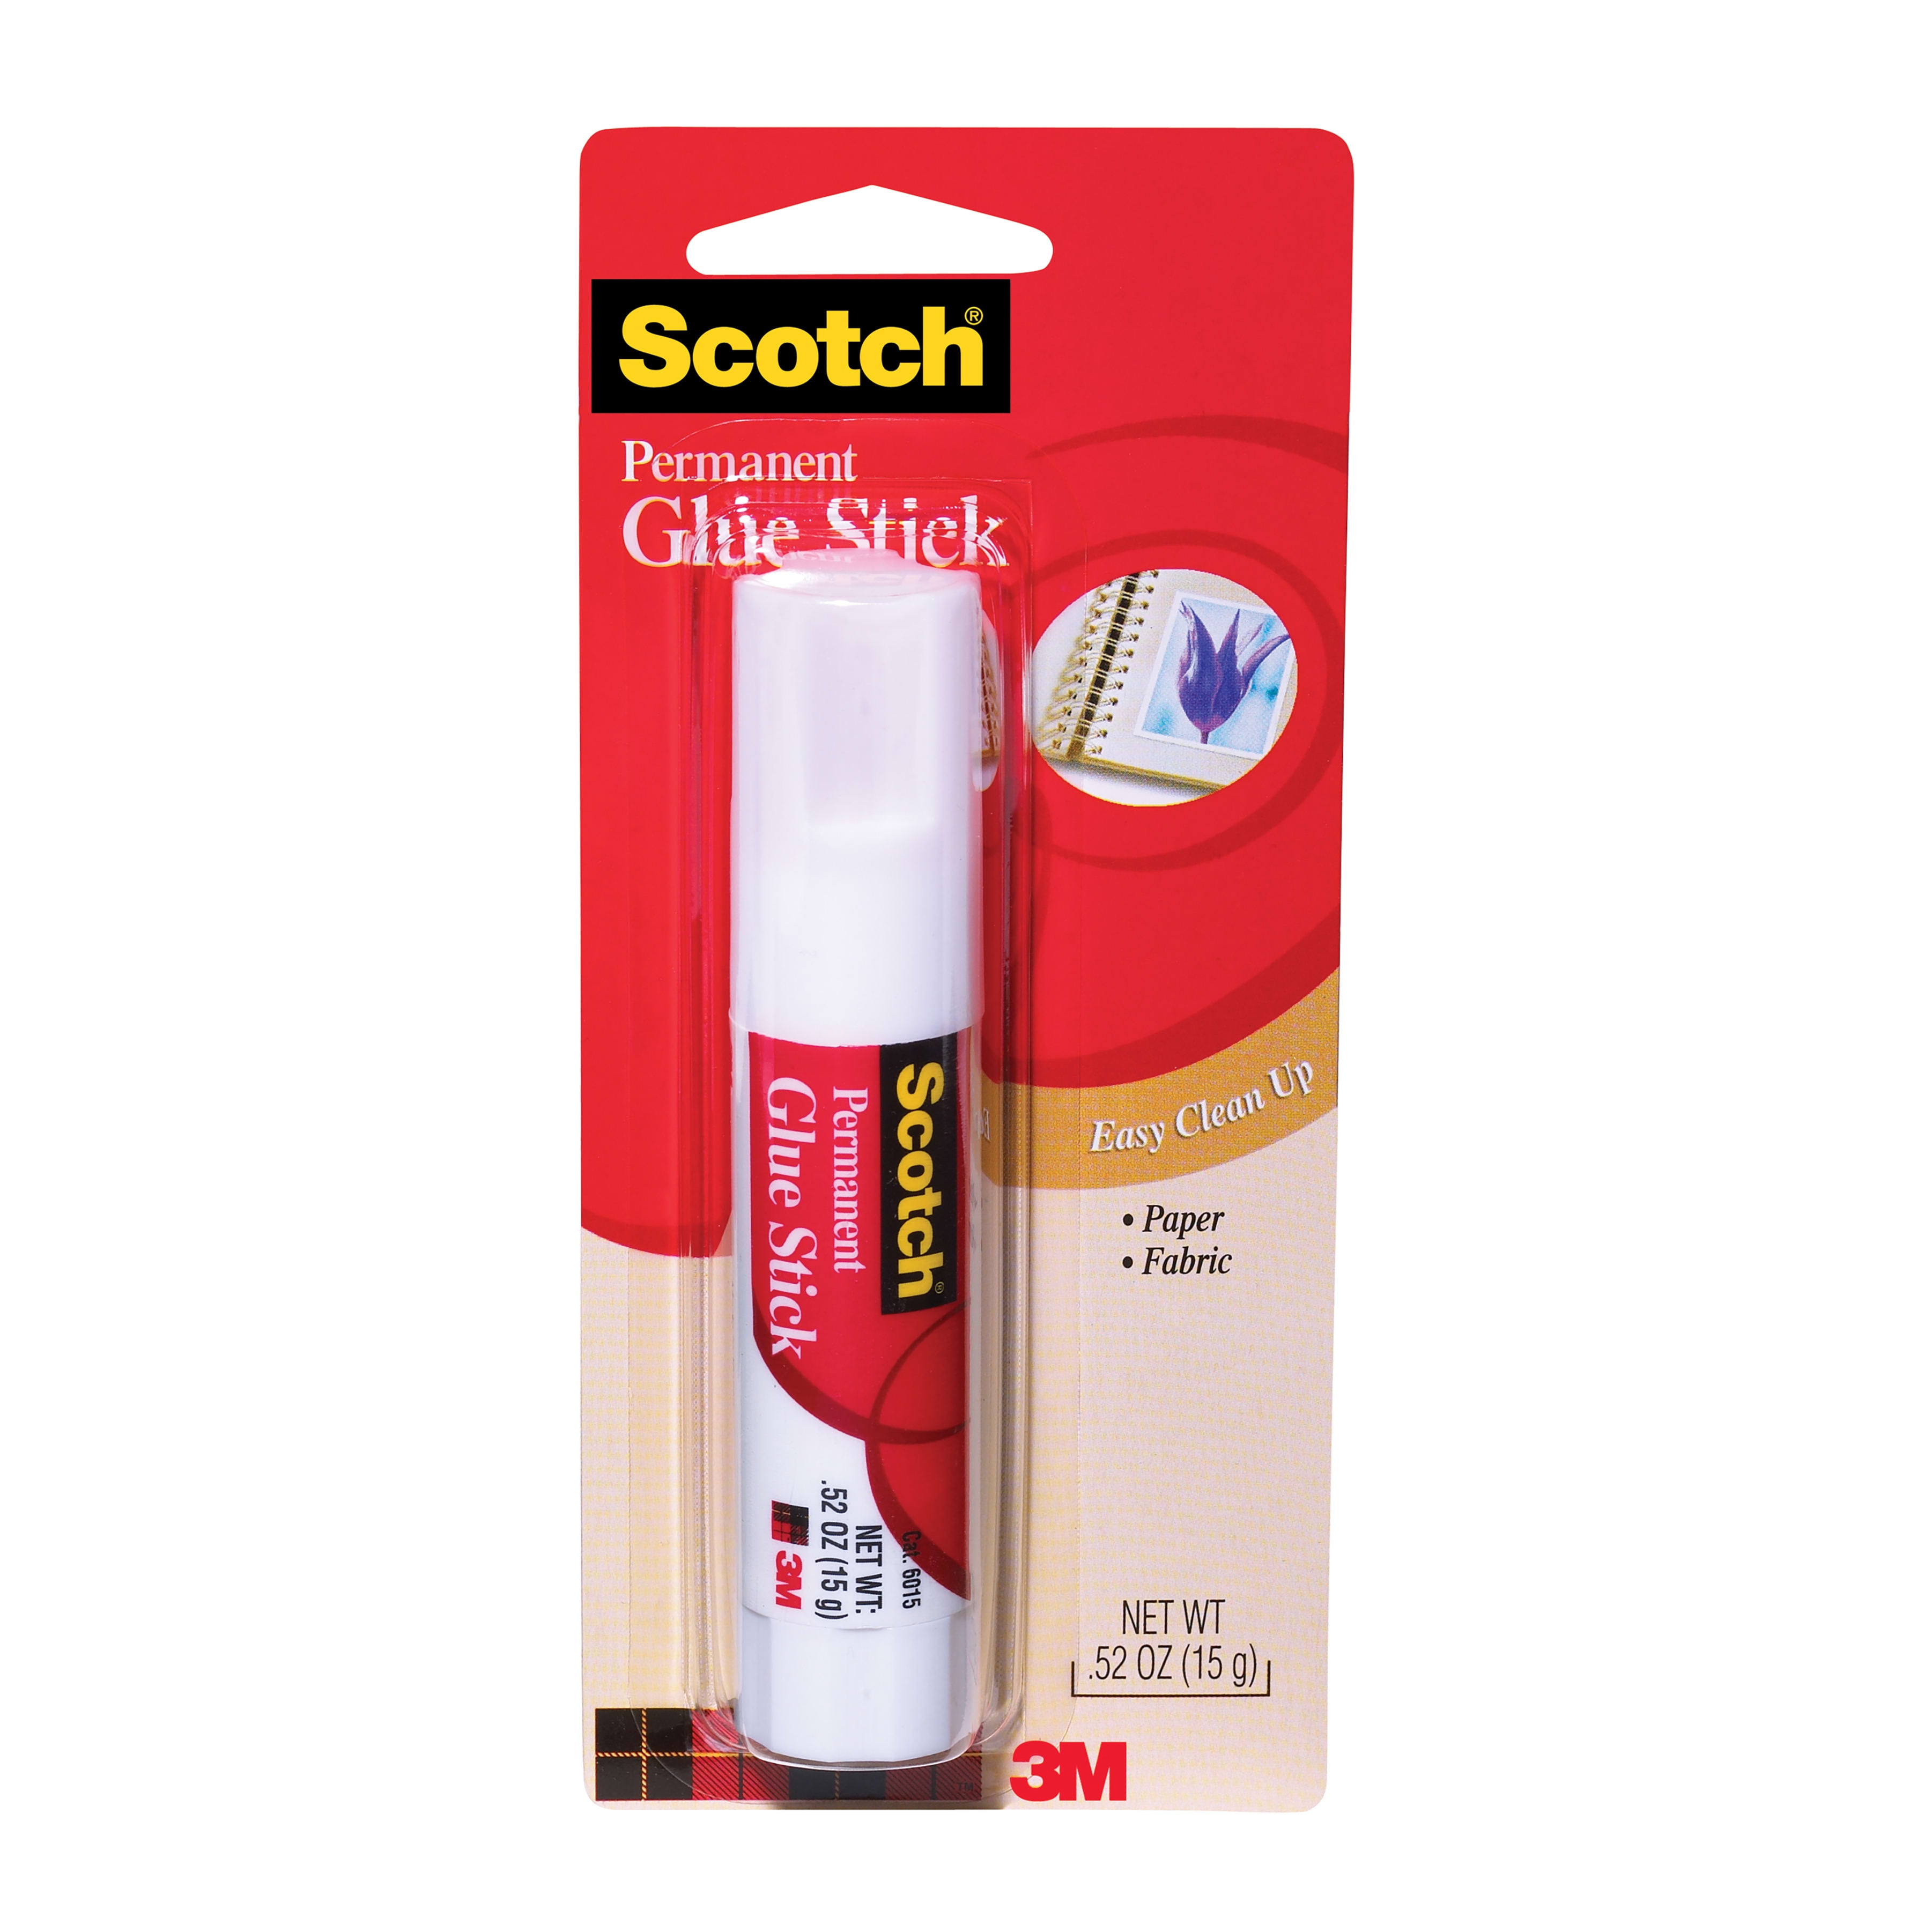 Scotch Glue Stick, Permanent - 2 pack, 0.25 oz sticks